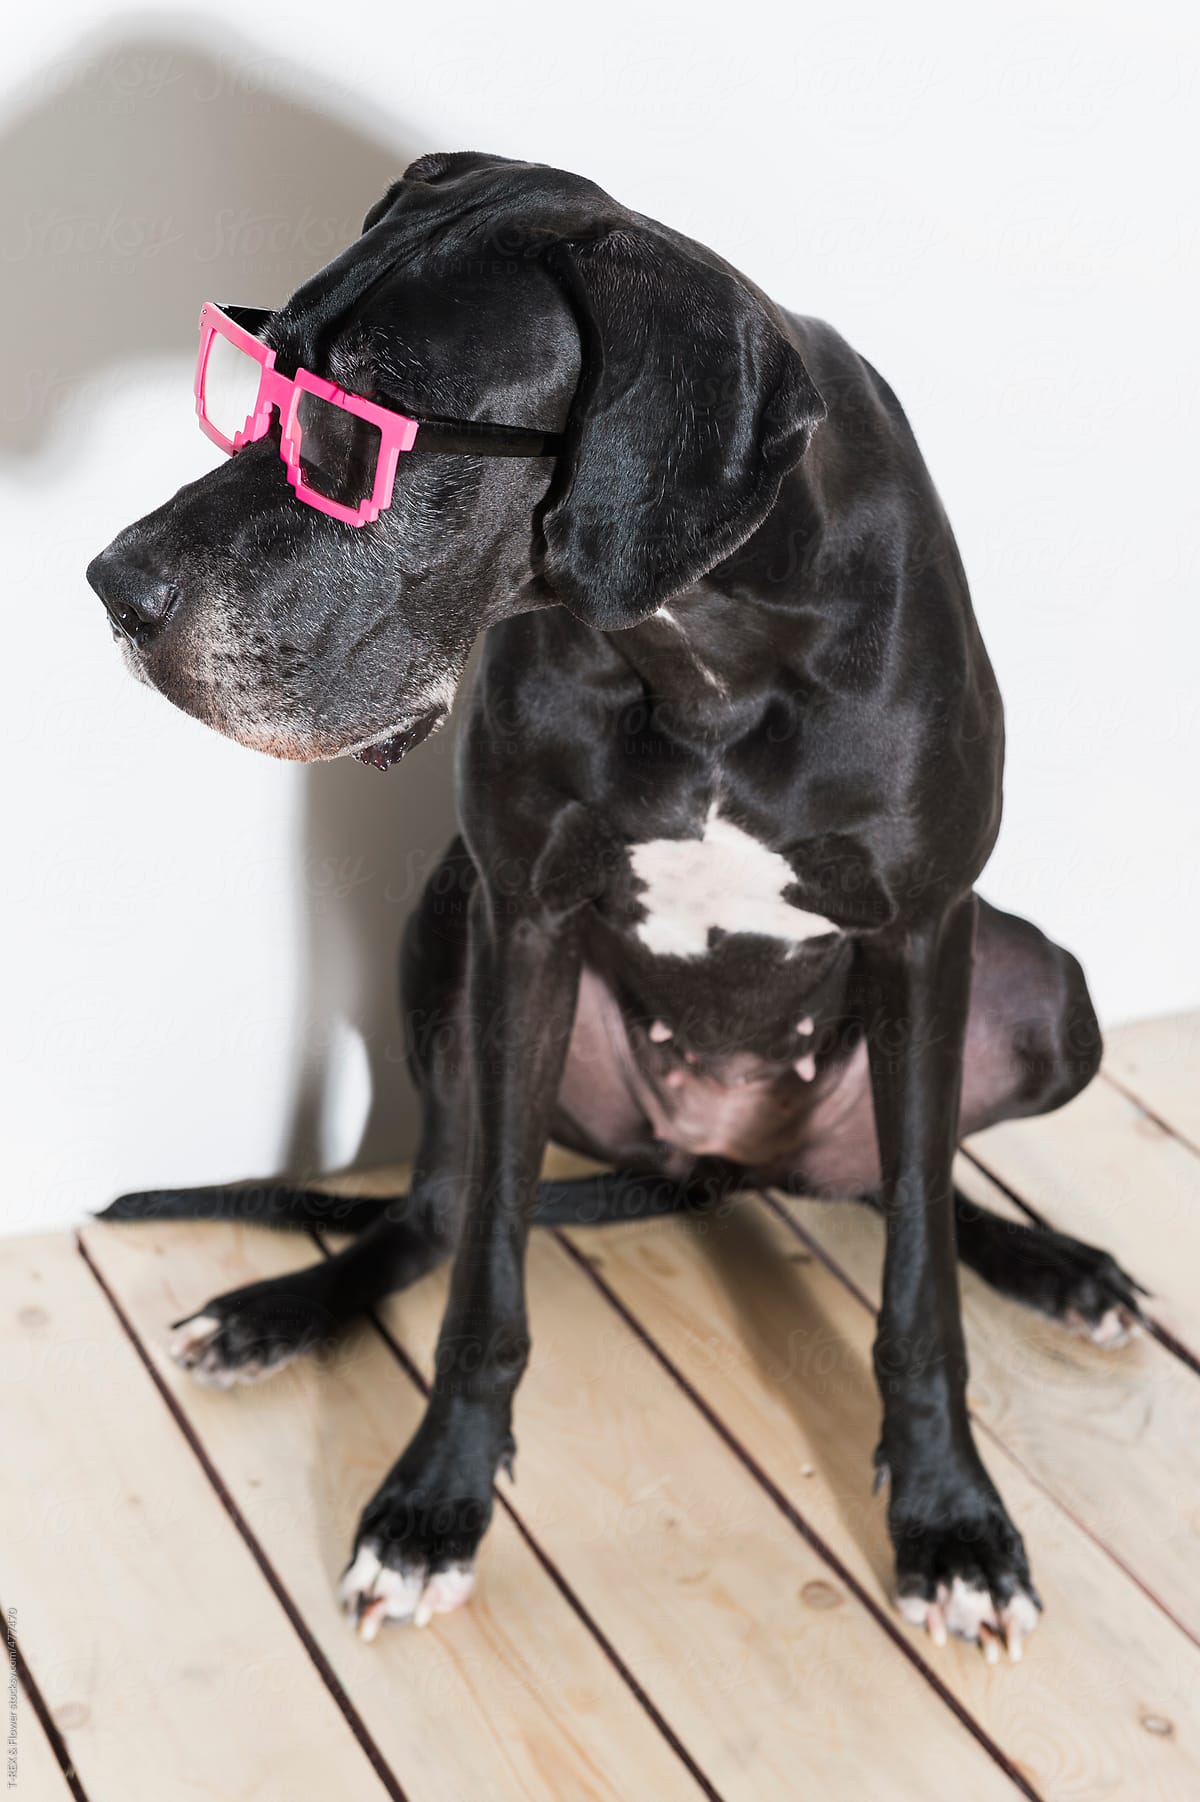 Cute dog wearing funny glasses